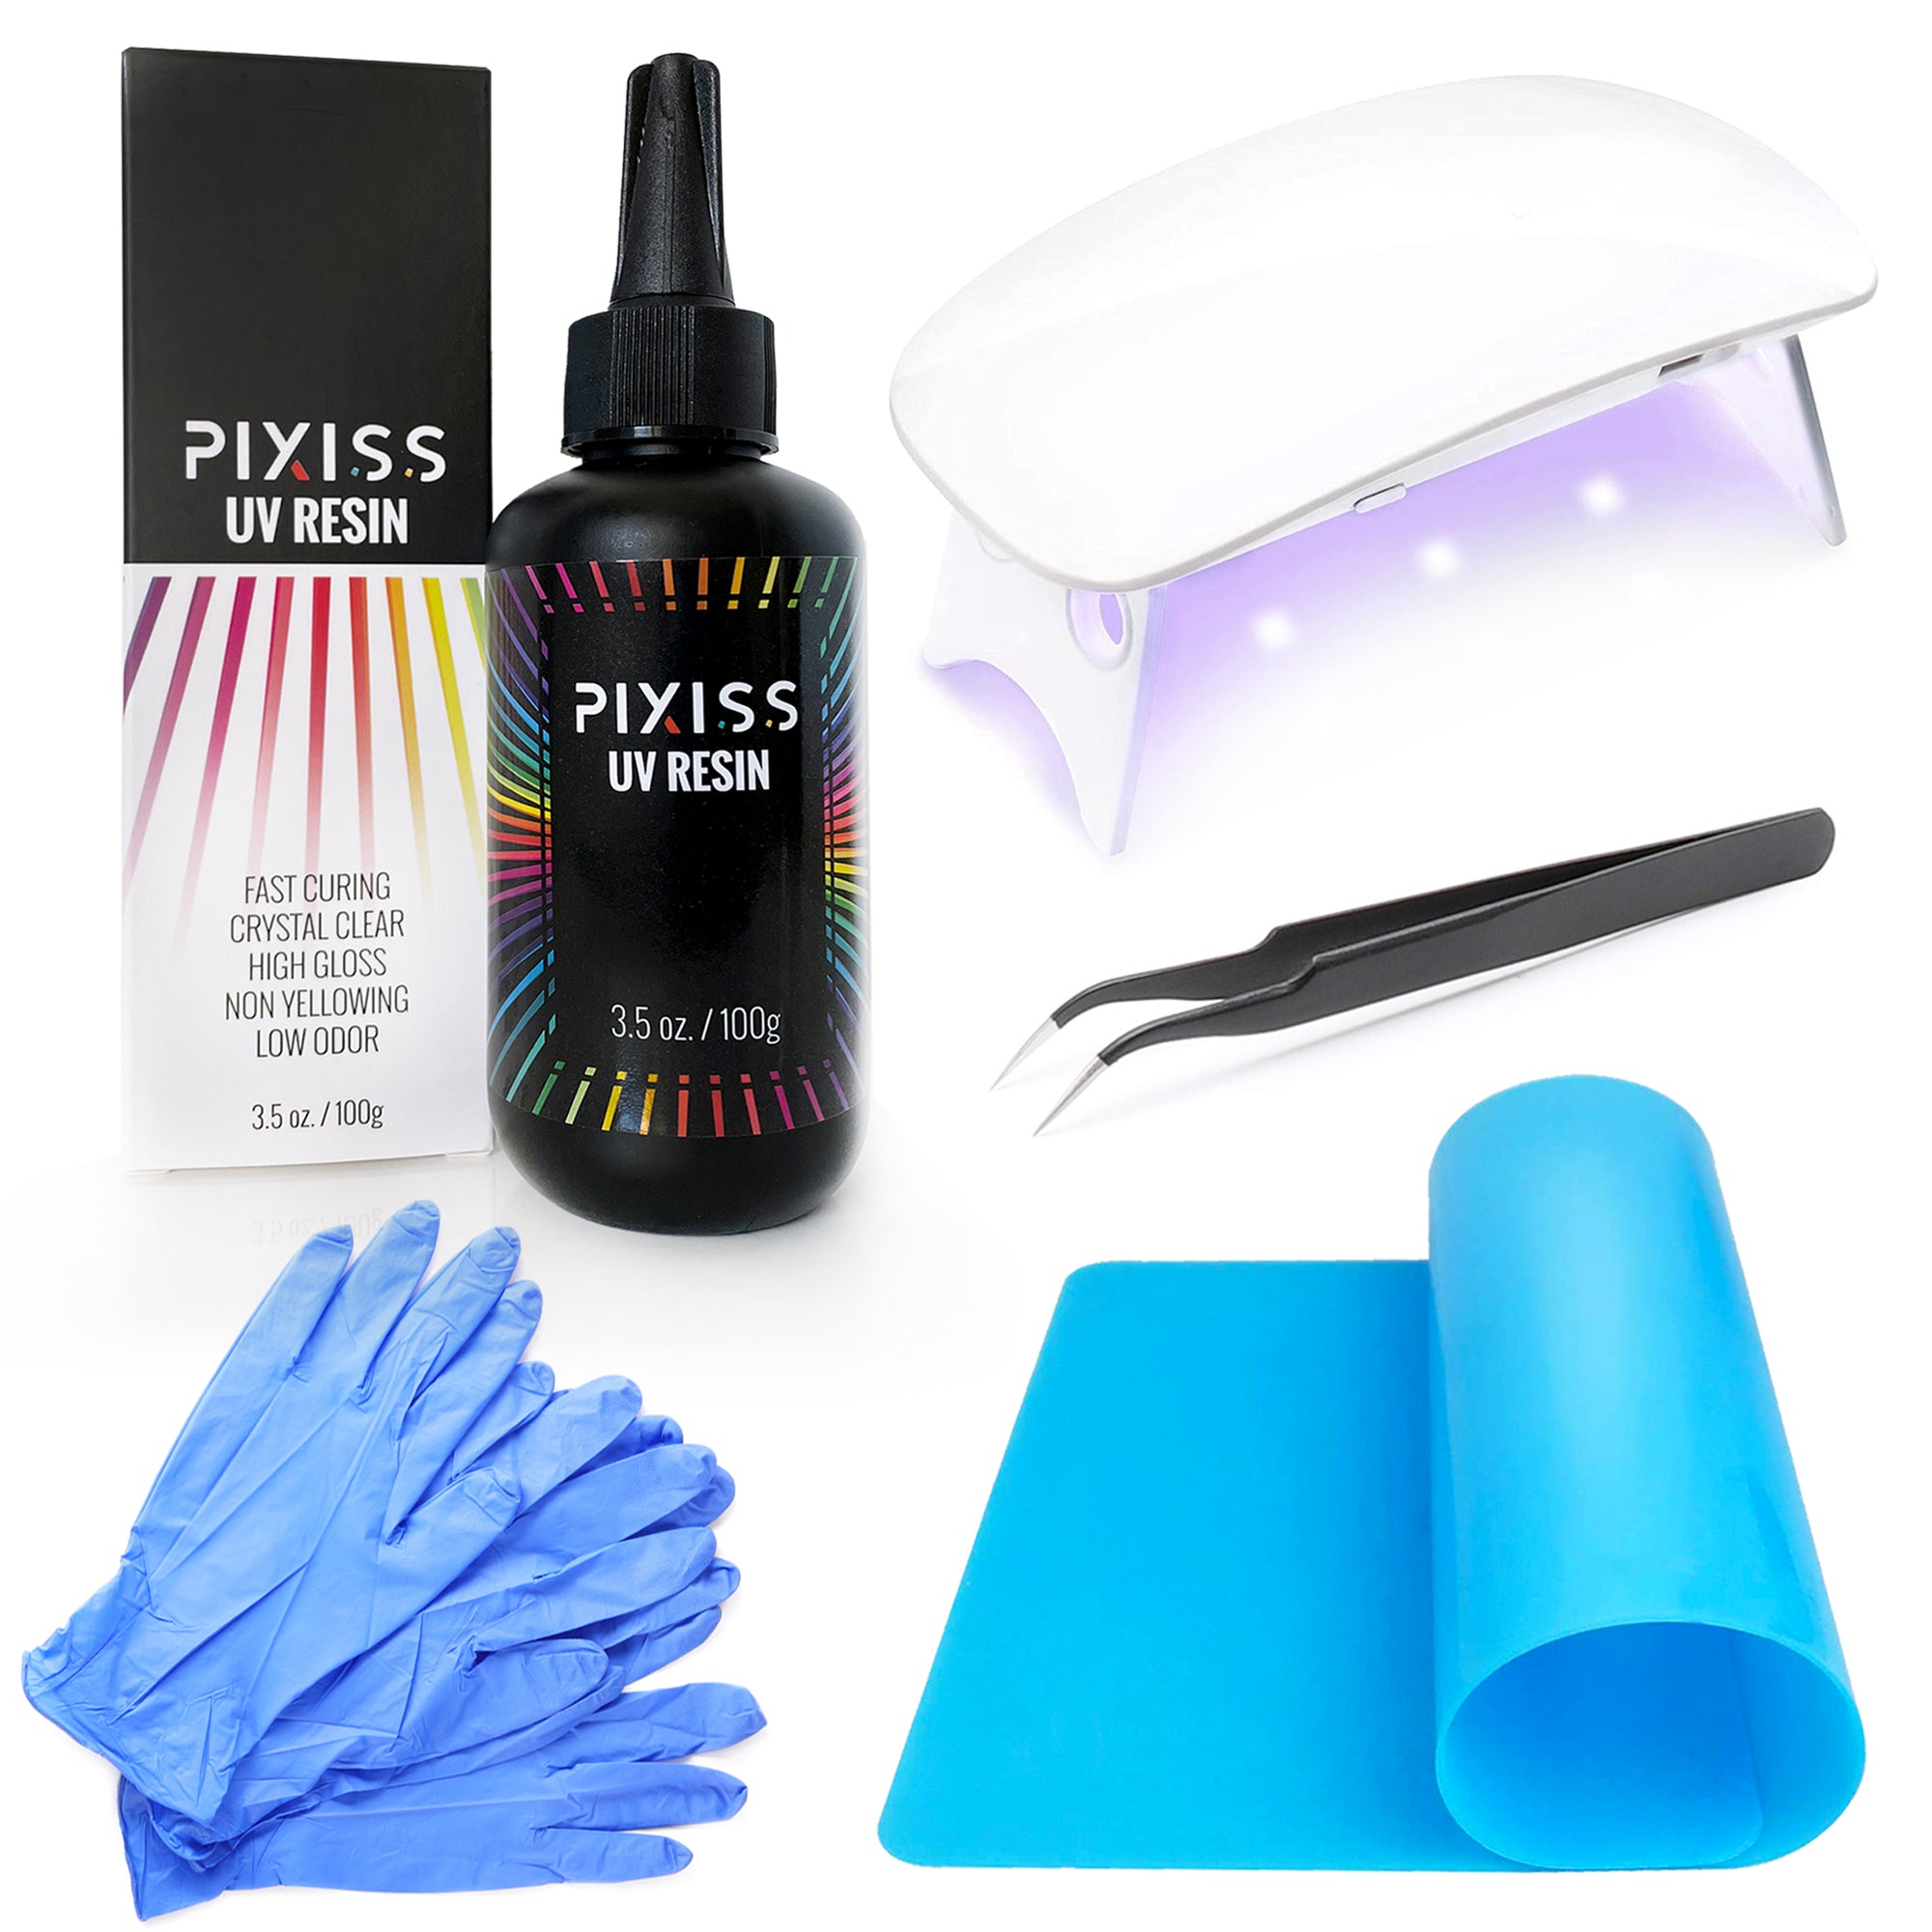 UV Resin Curing Light Kit + Safety Glasses - Chair & Chisel